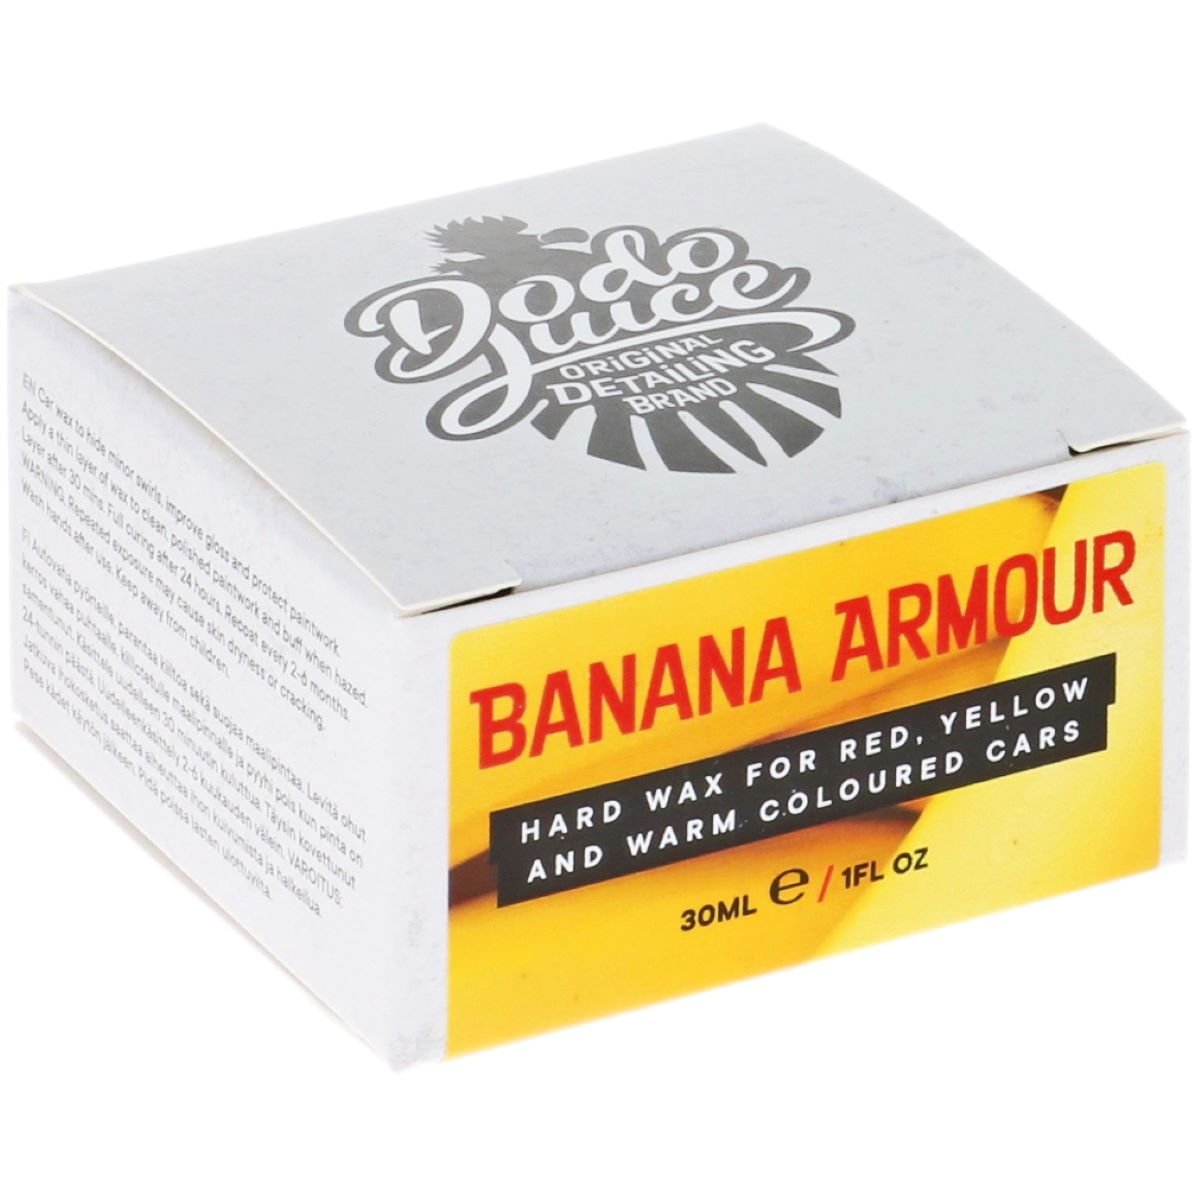 Banana Armour hard wax for warm coloured cars - 30ml